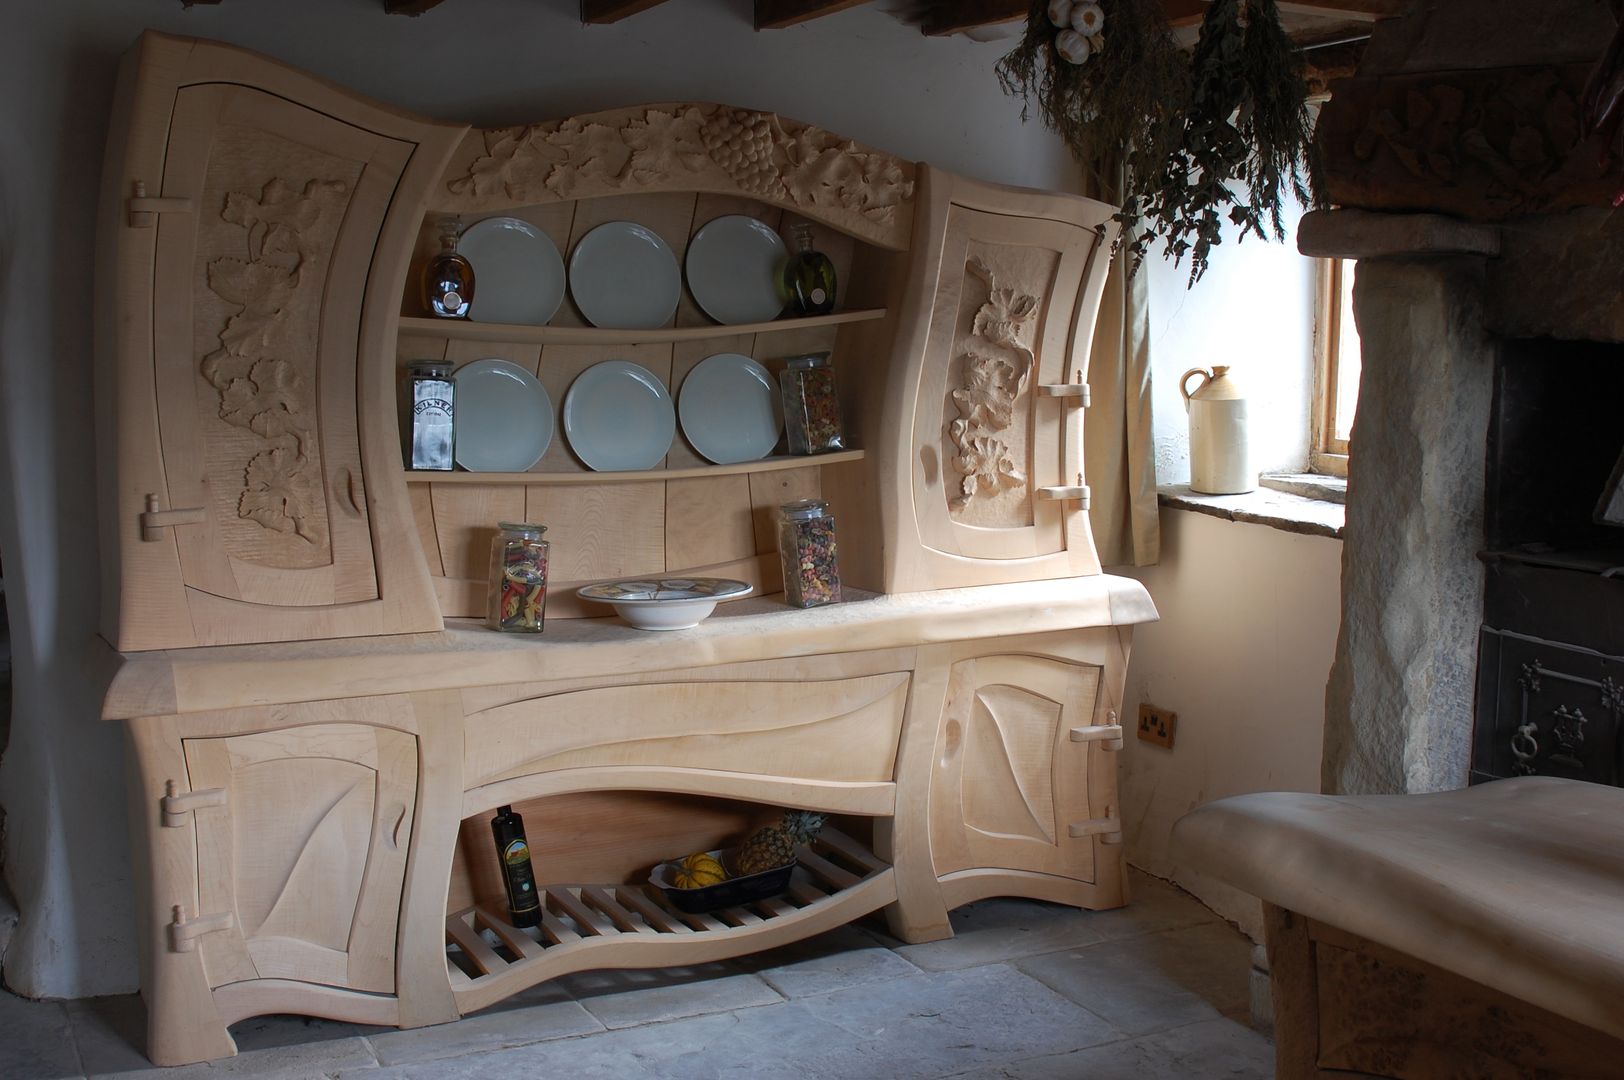 Sculptural Organic Handmade Bespoke kitchen Furniture, Carved Wood Design Bespoke Kitchens. Carved Wood Design Bespoke Kitchens. Kitchen Cabinets & shelves